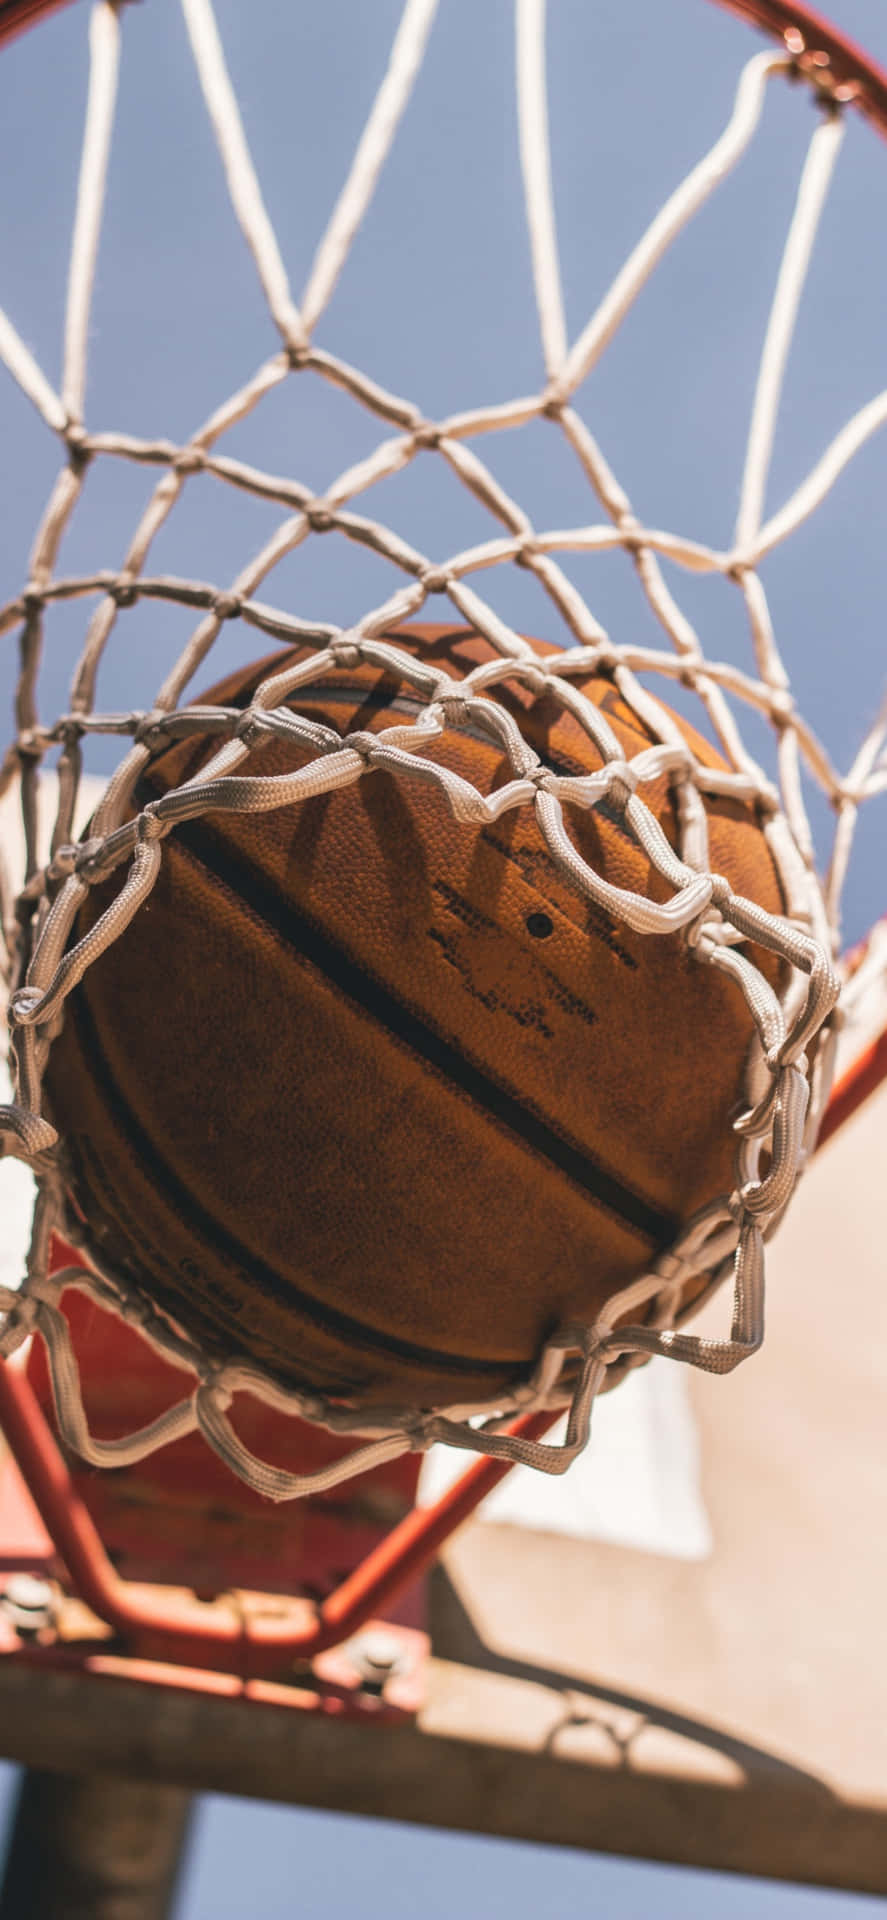 Iphonexs Basketball-netz Hintergrund